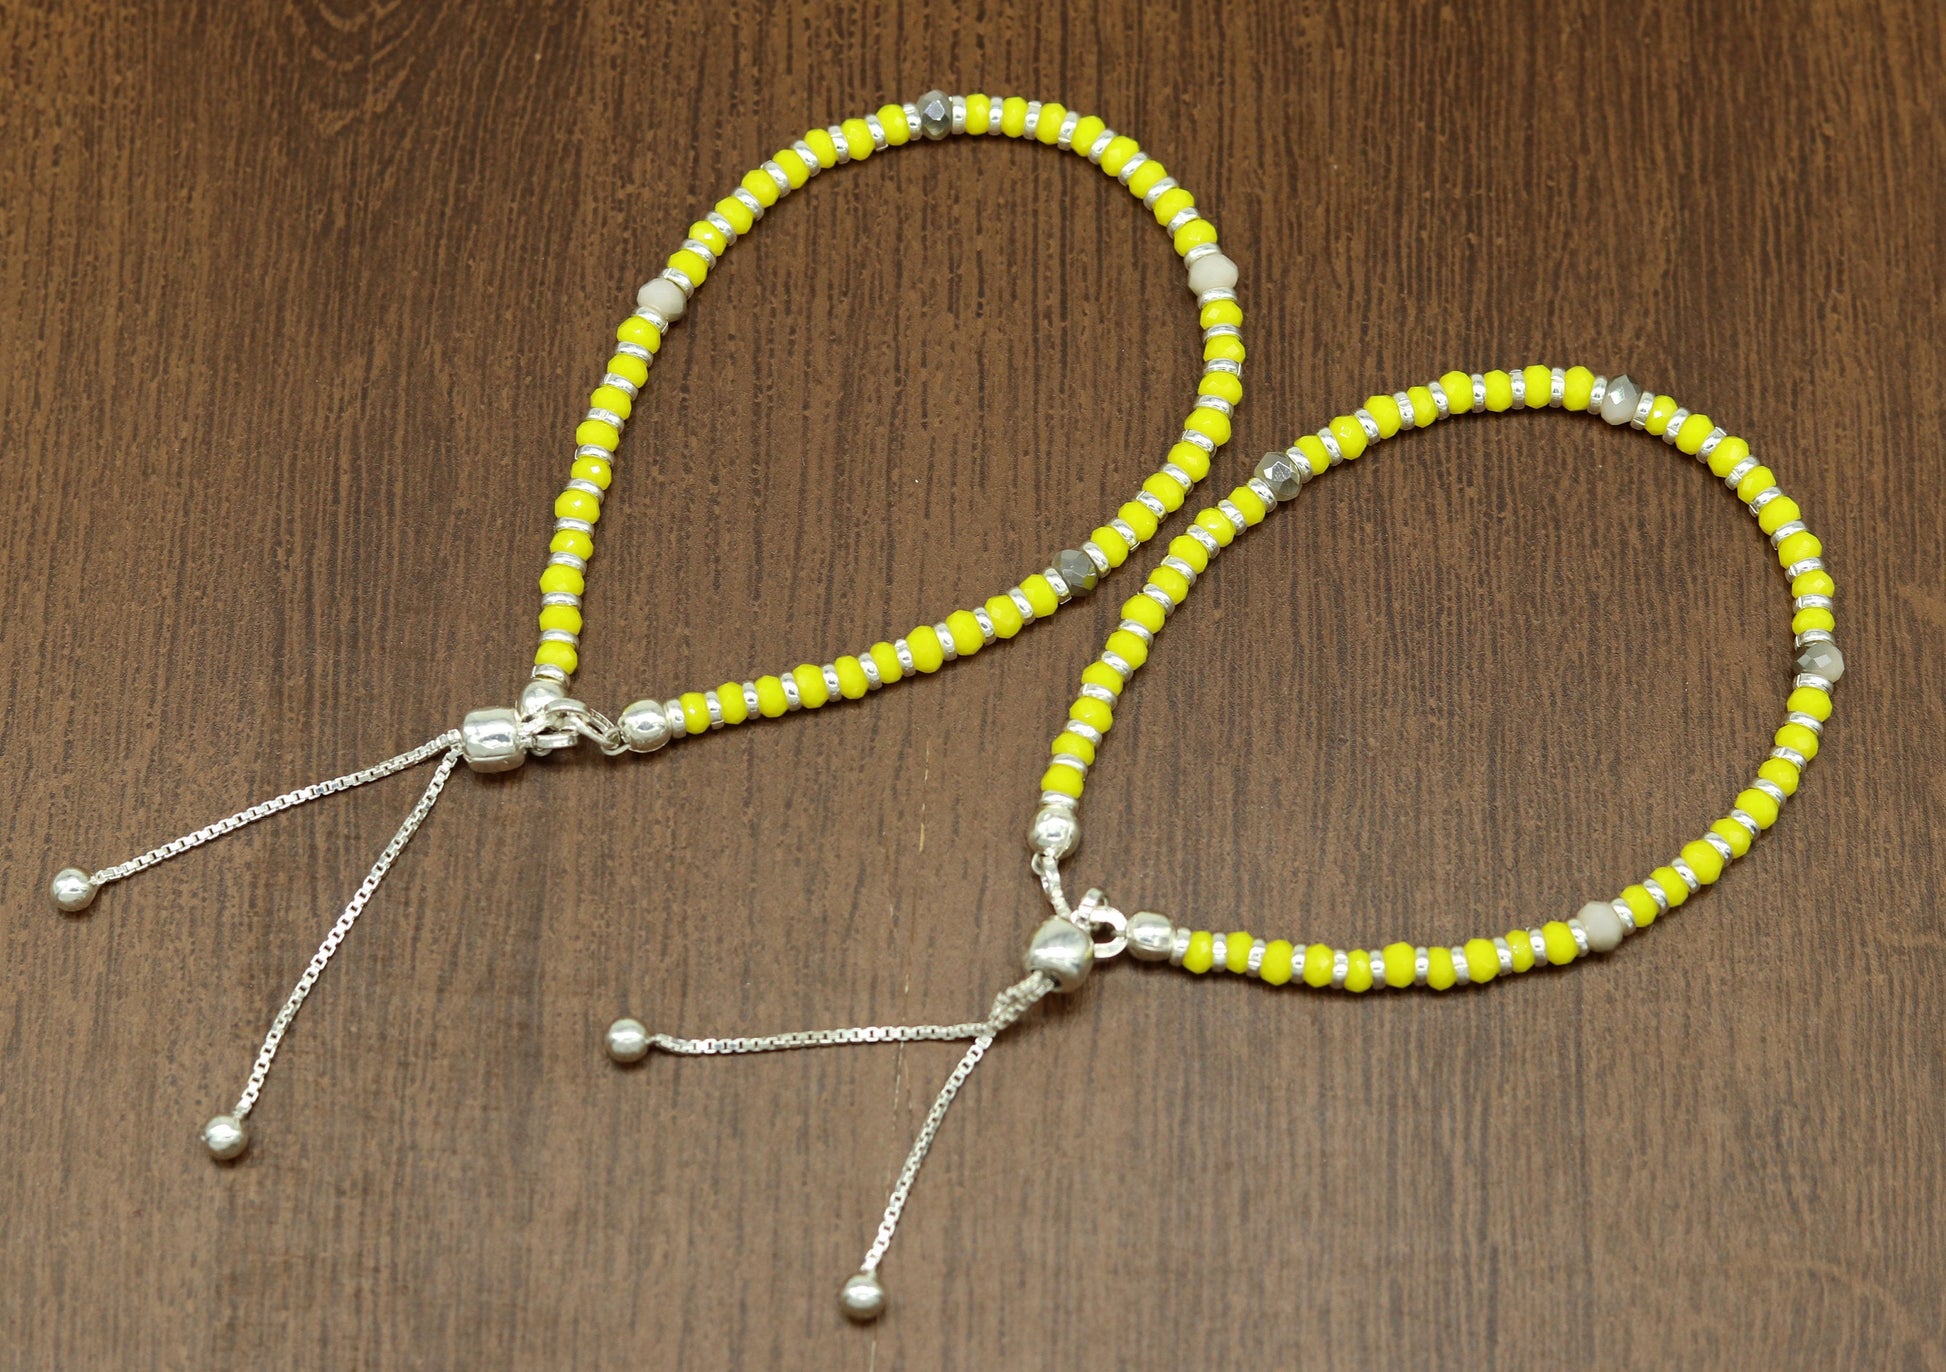 7" 925 sterling silver gorgeous silver and yellow beads adjustable bracelet, charm bracelet, customized bracelet girl's jewelry sbr164 - TRIBAL ORNAMENTS